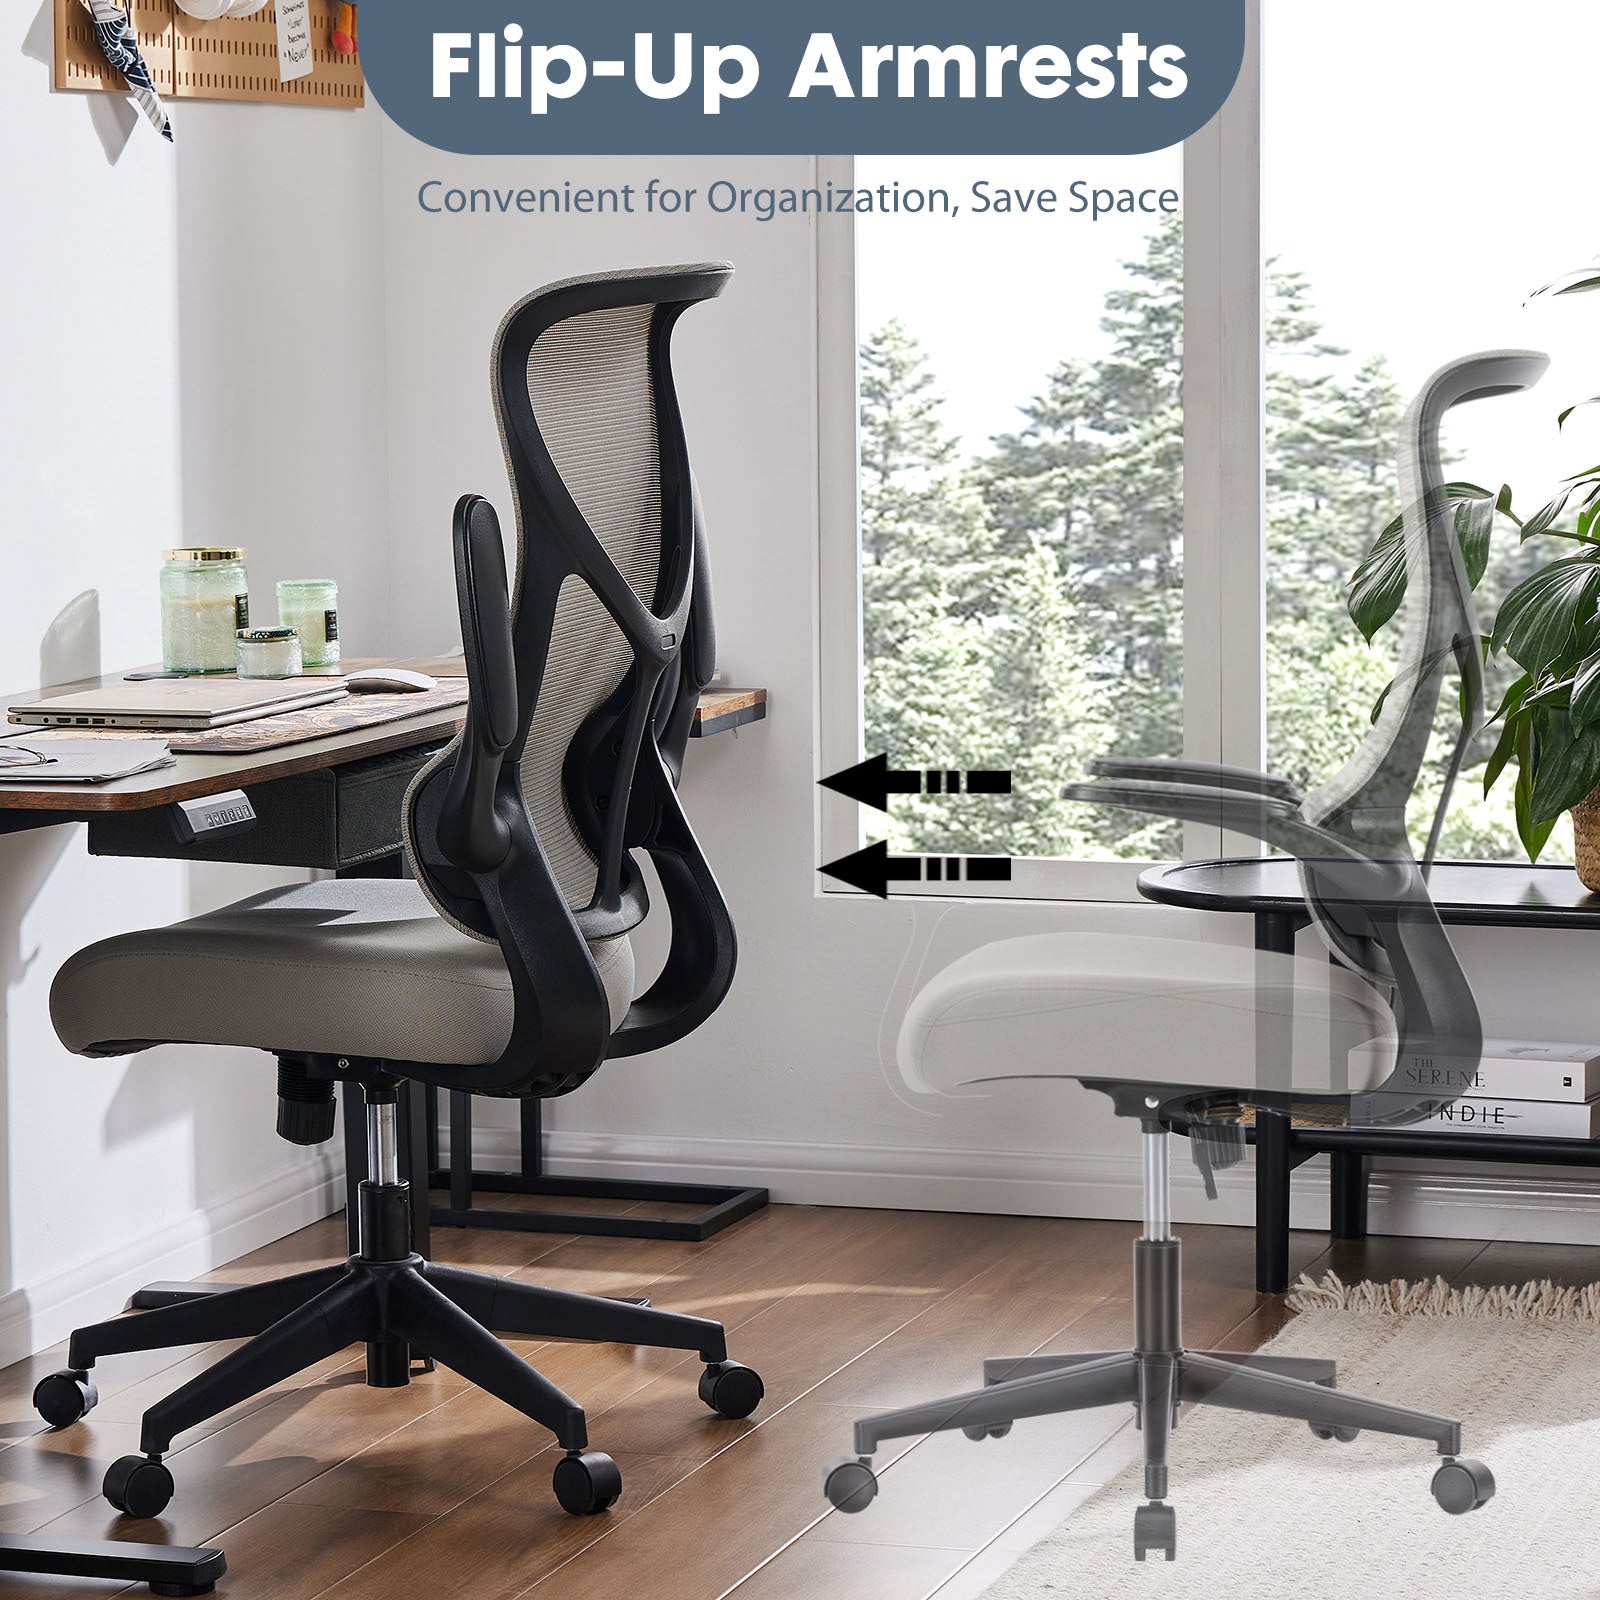 Sweetcrispy Ergonomic Executive High Back Office Chair gray-nylon mesh